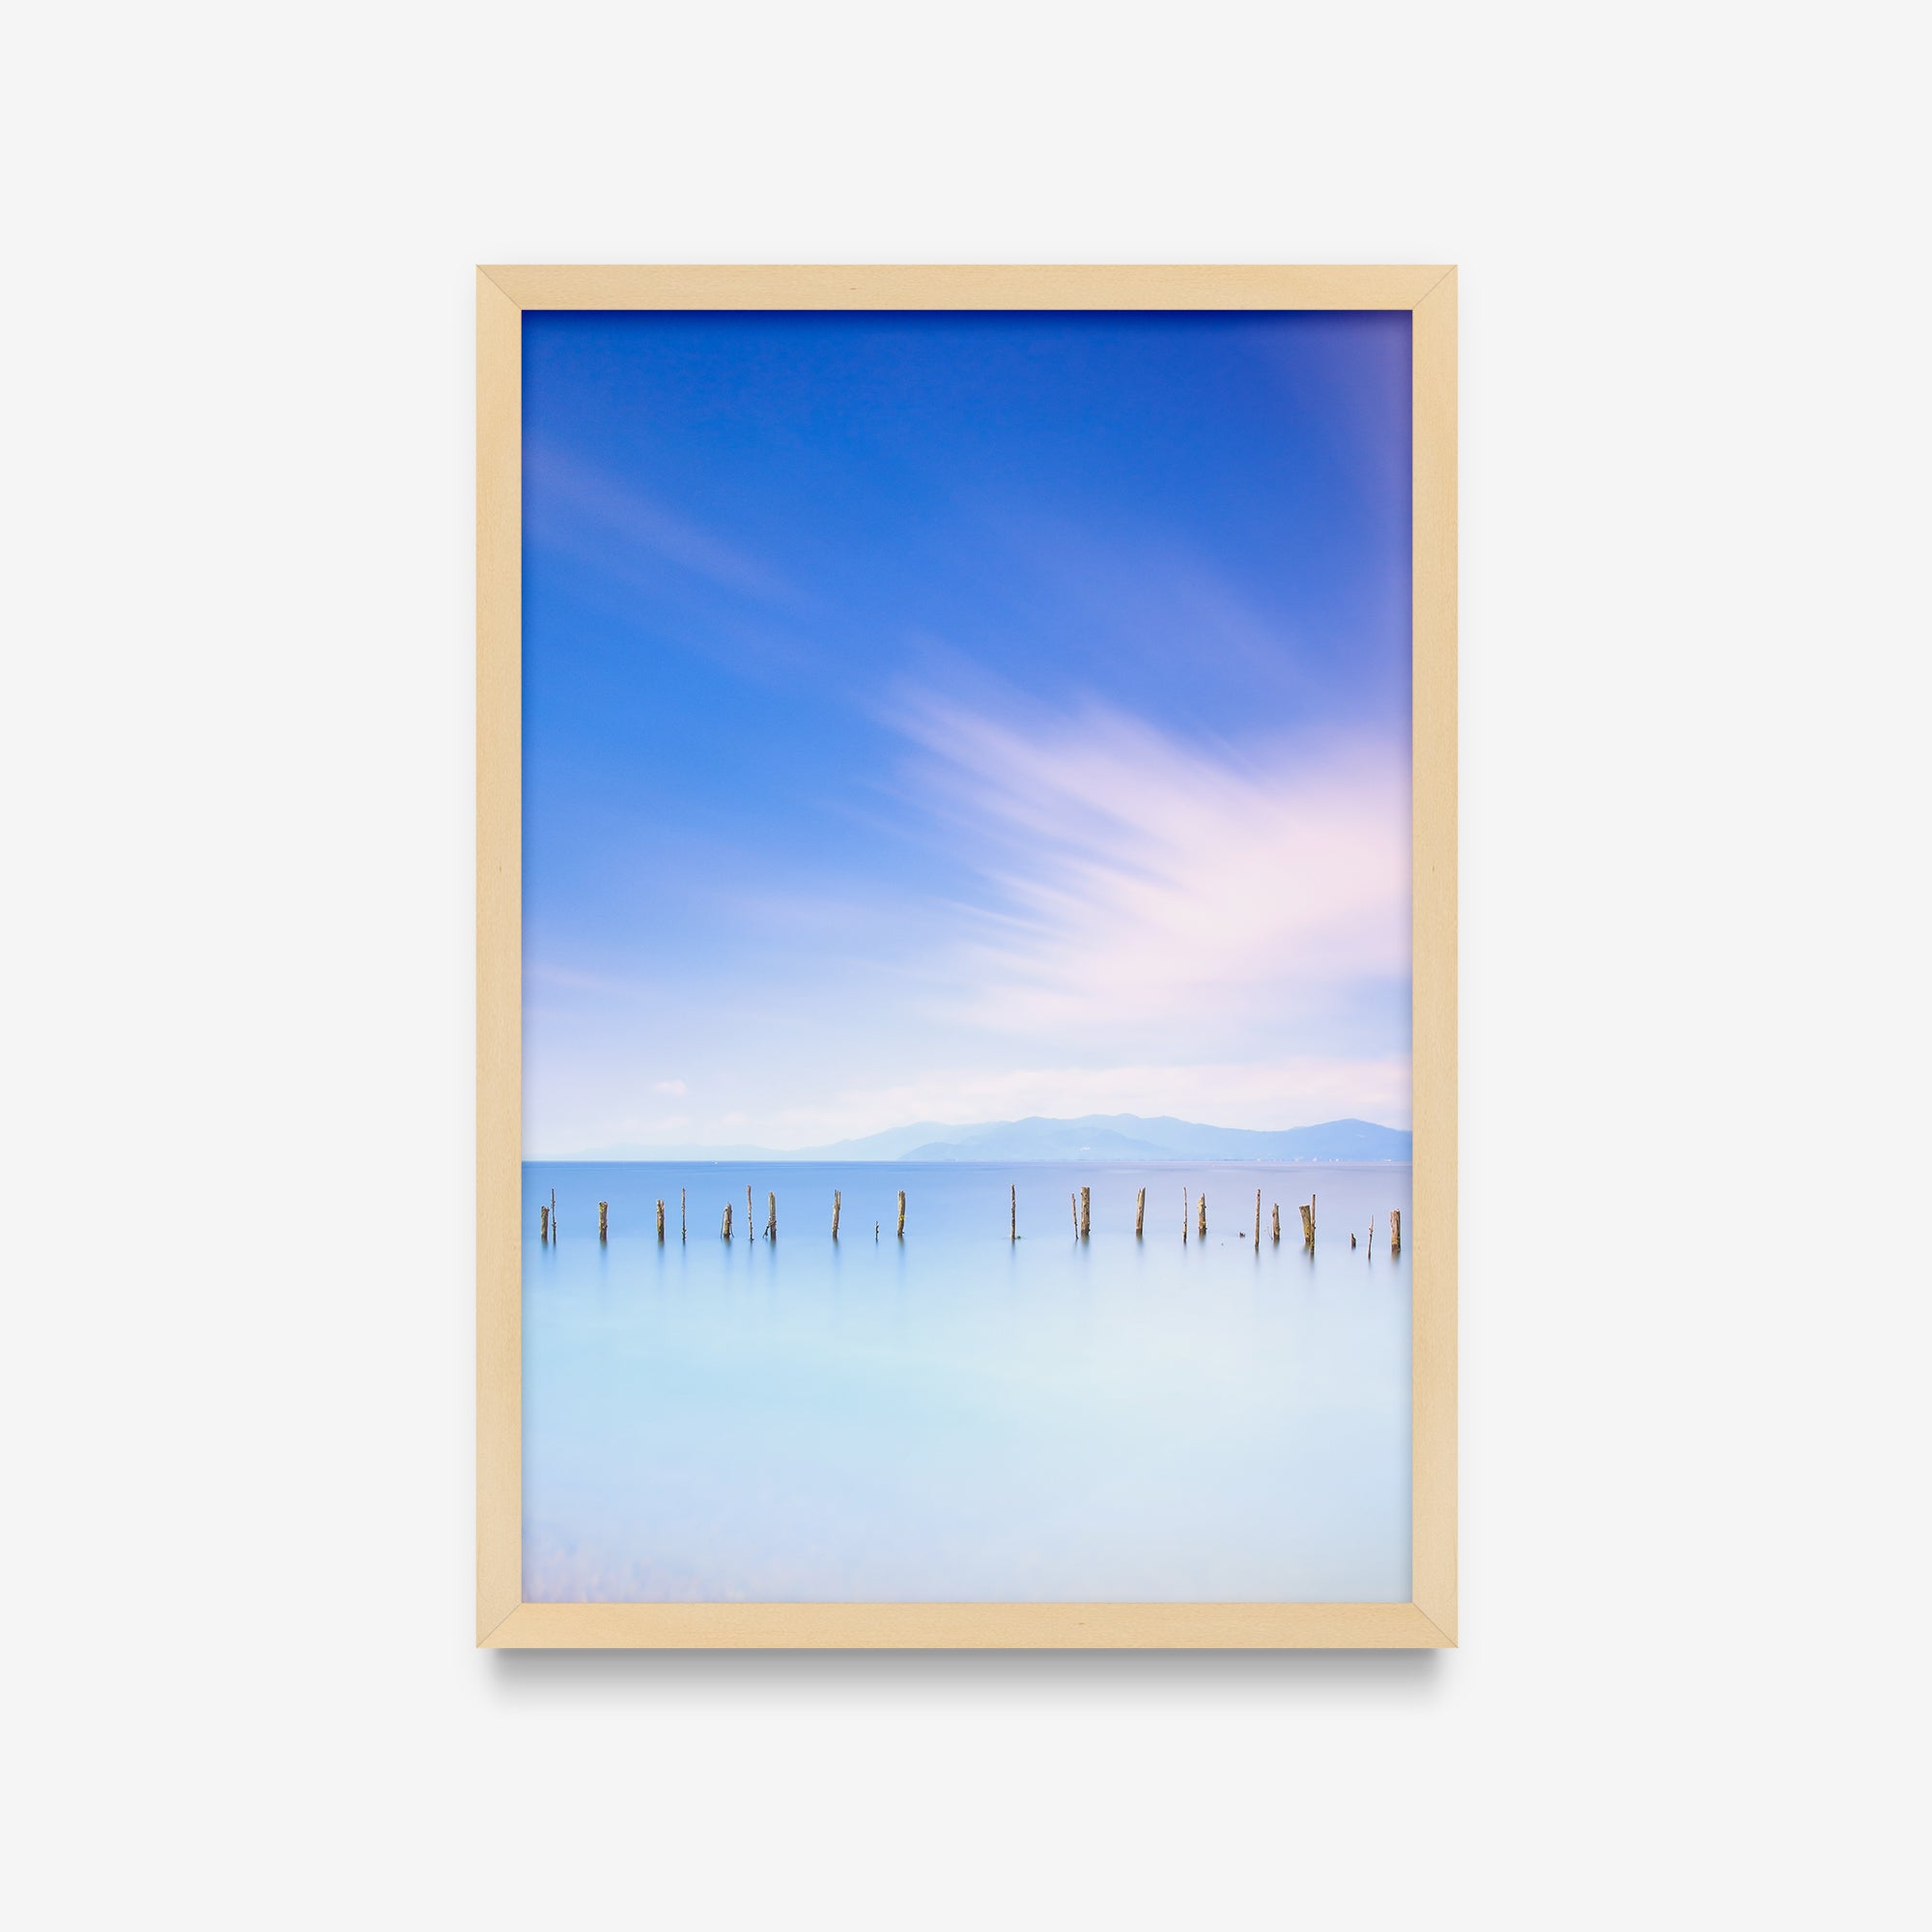 Paisagens - Long exposure sea & sky